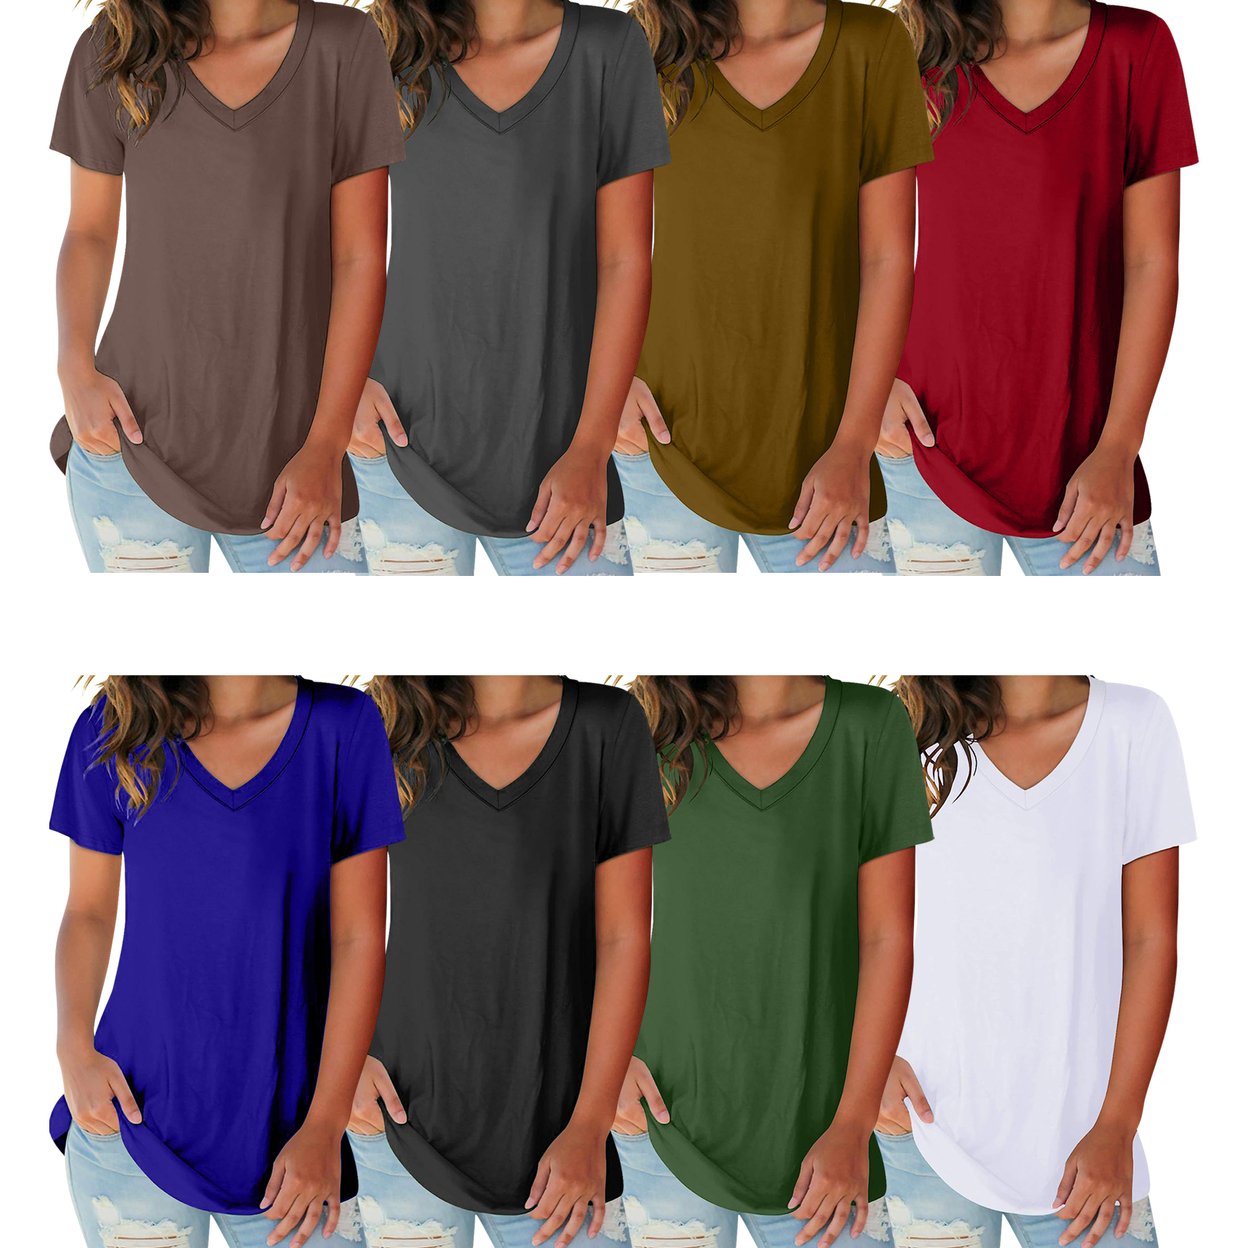 3-Pack: Women's Ultra Soft Smooth Cotton Blend Basic V-Neck Short Sleeve Shirts - Black, Navy, Brown, Xx-large